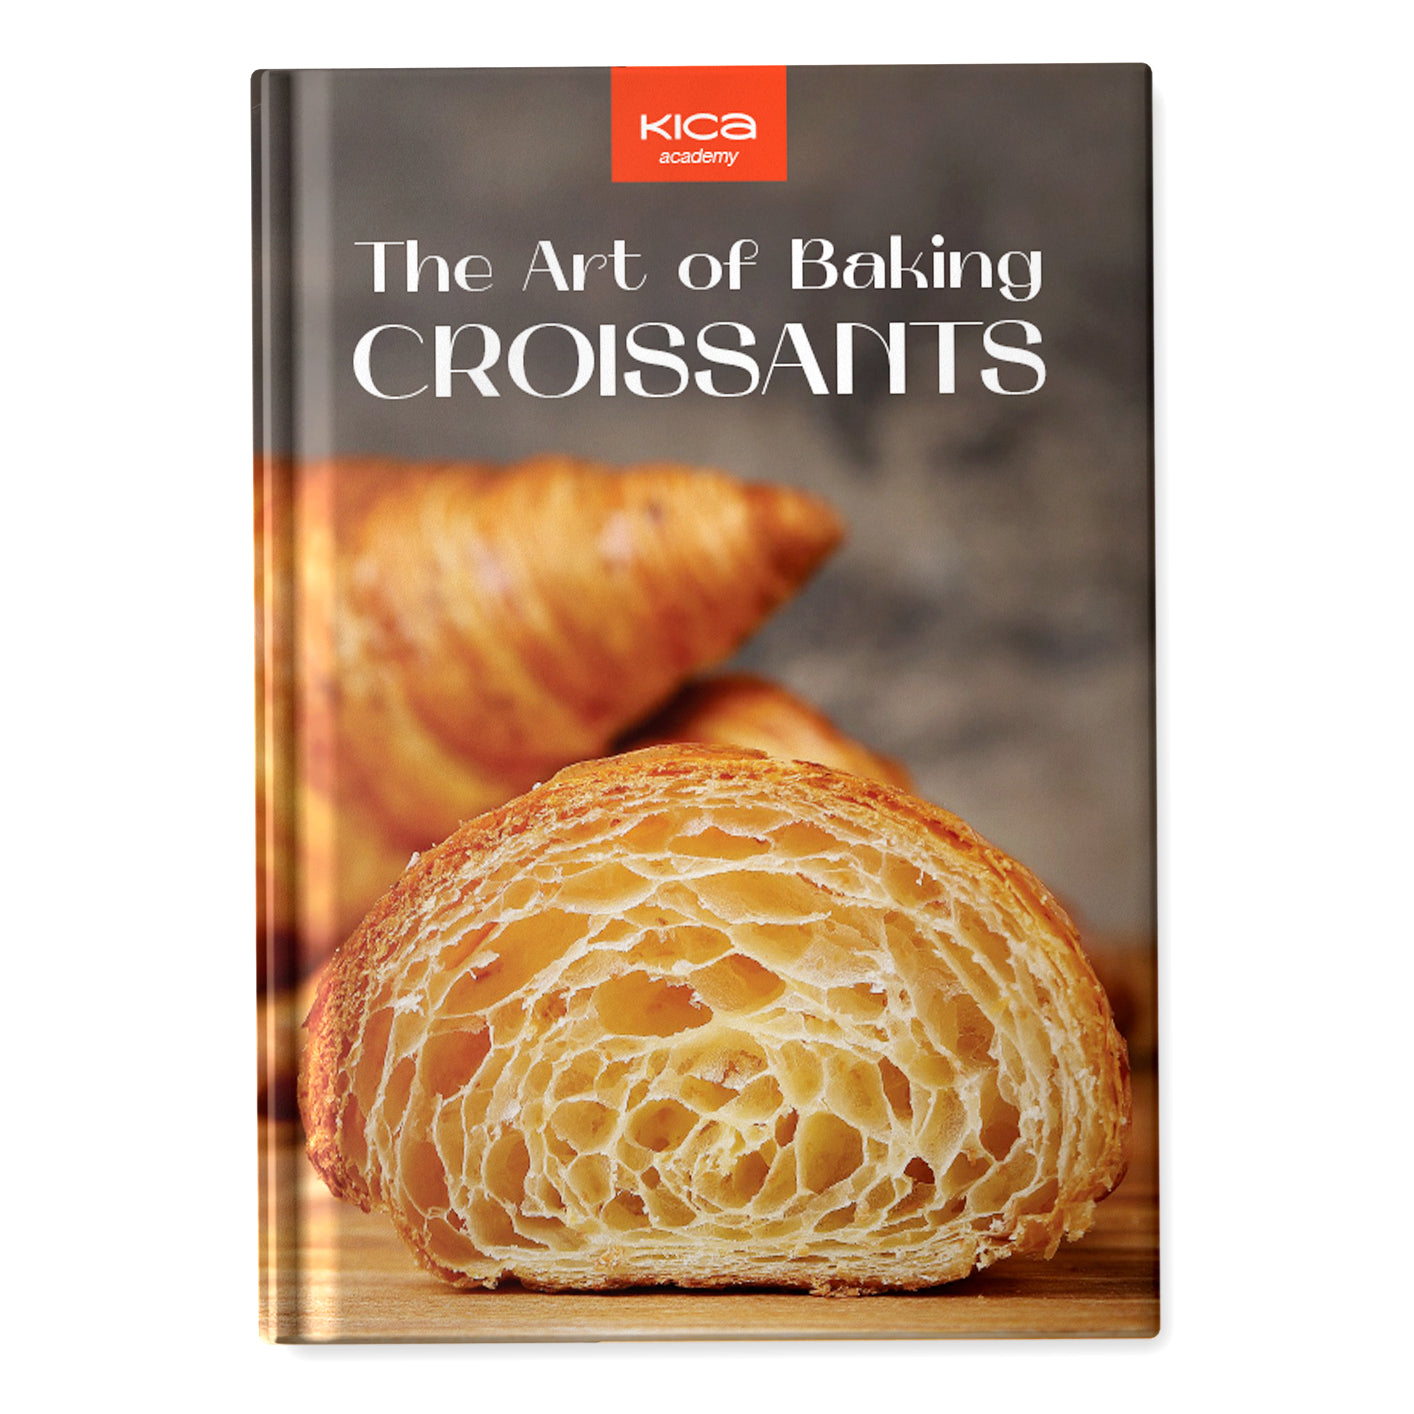 The Art of Baking Croissants